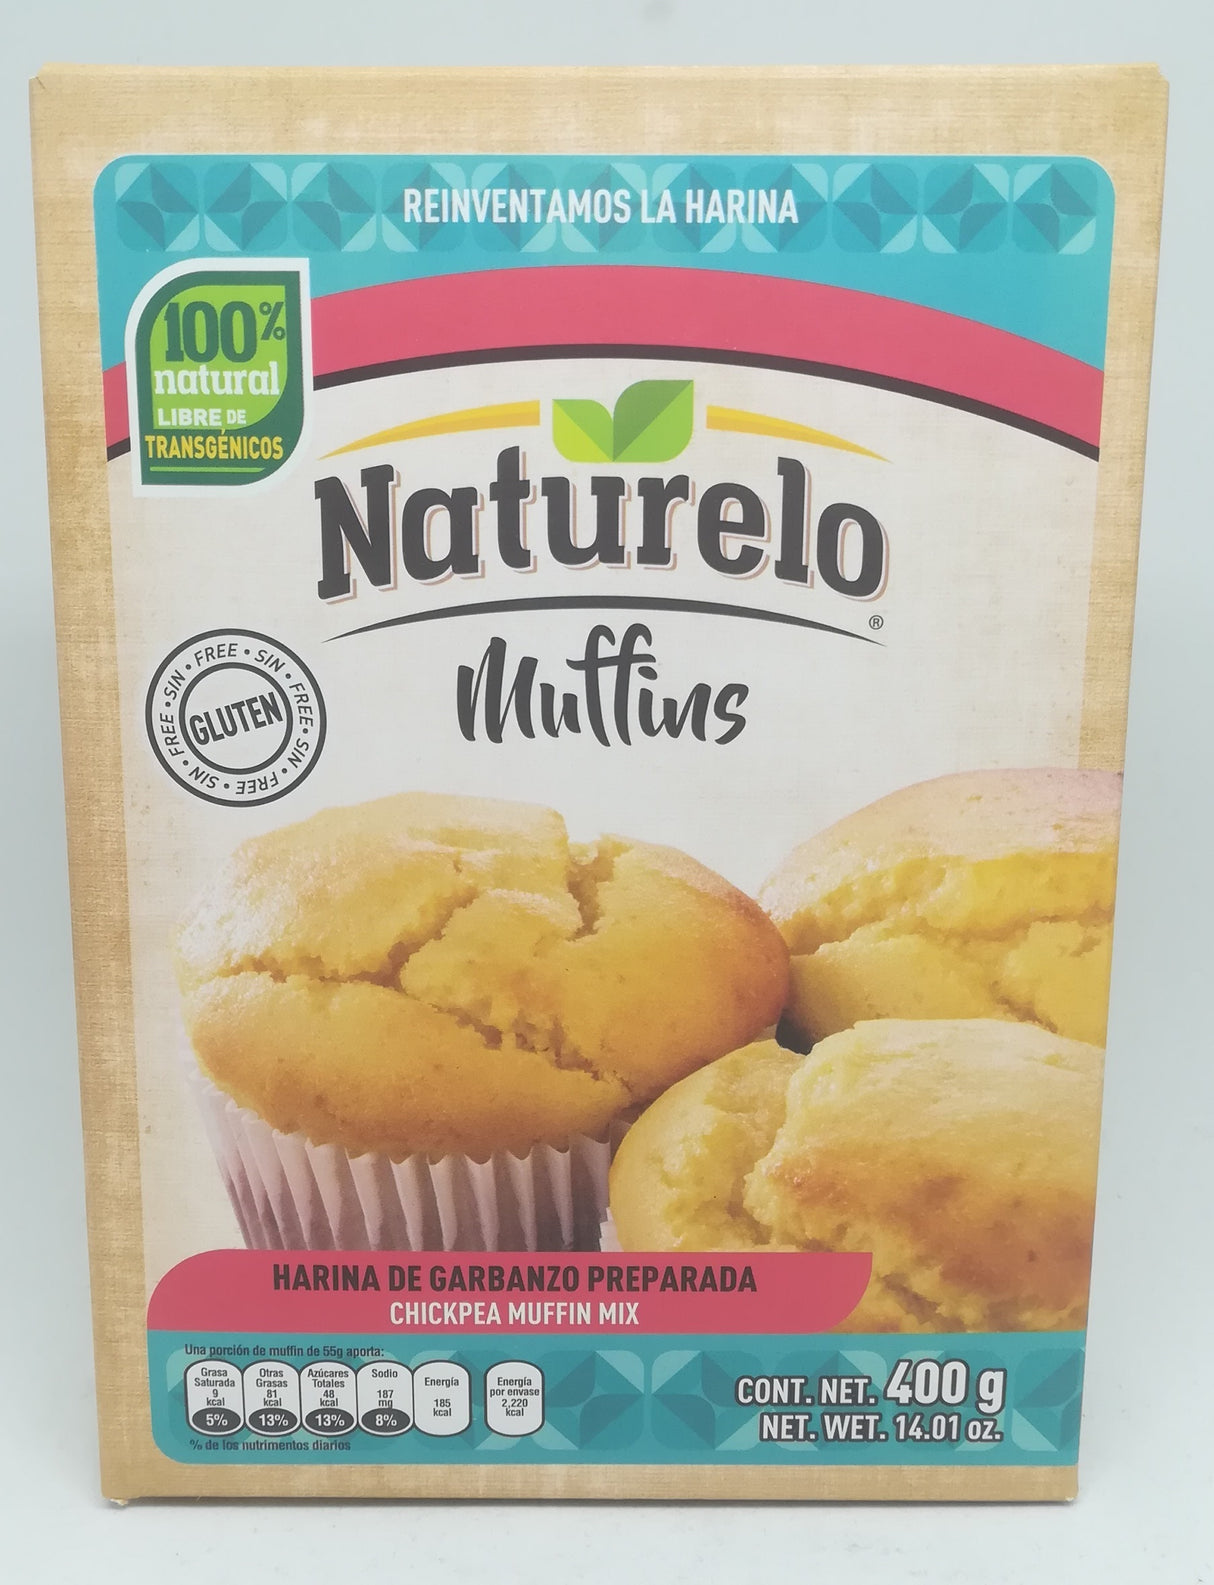 %Oferta% 20 OFF % Naturelo Muffin Garbanzo Mix 400g